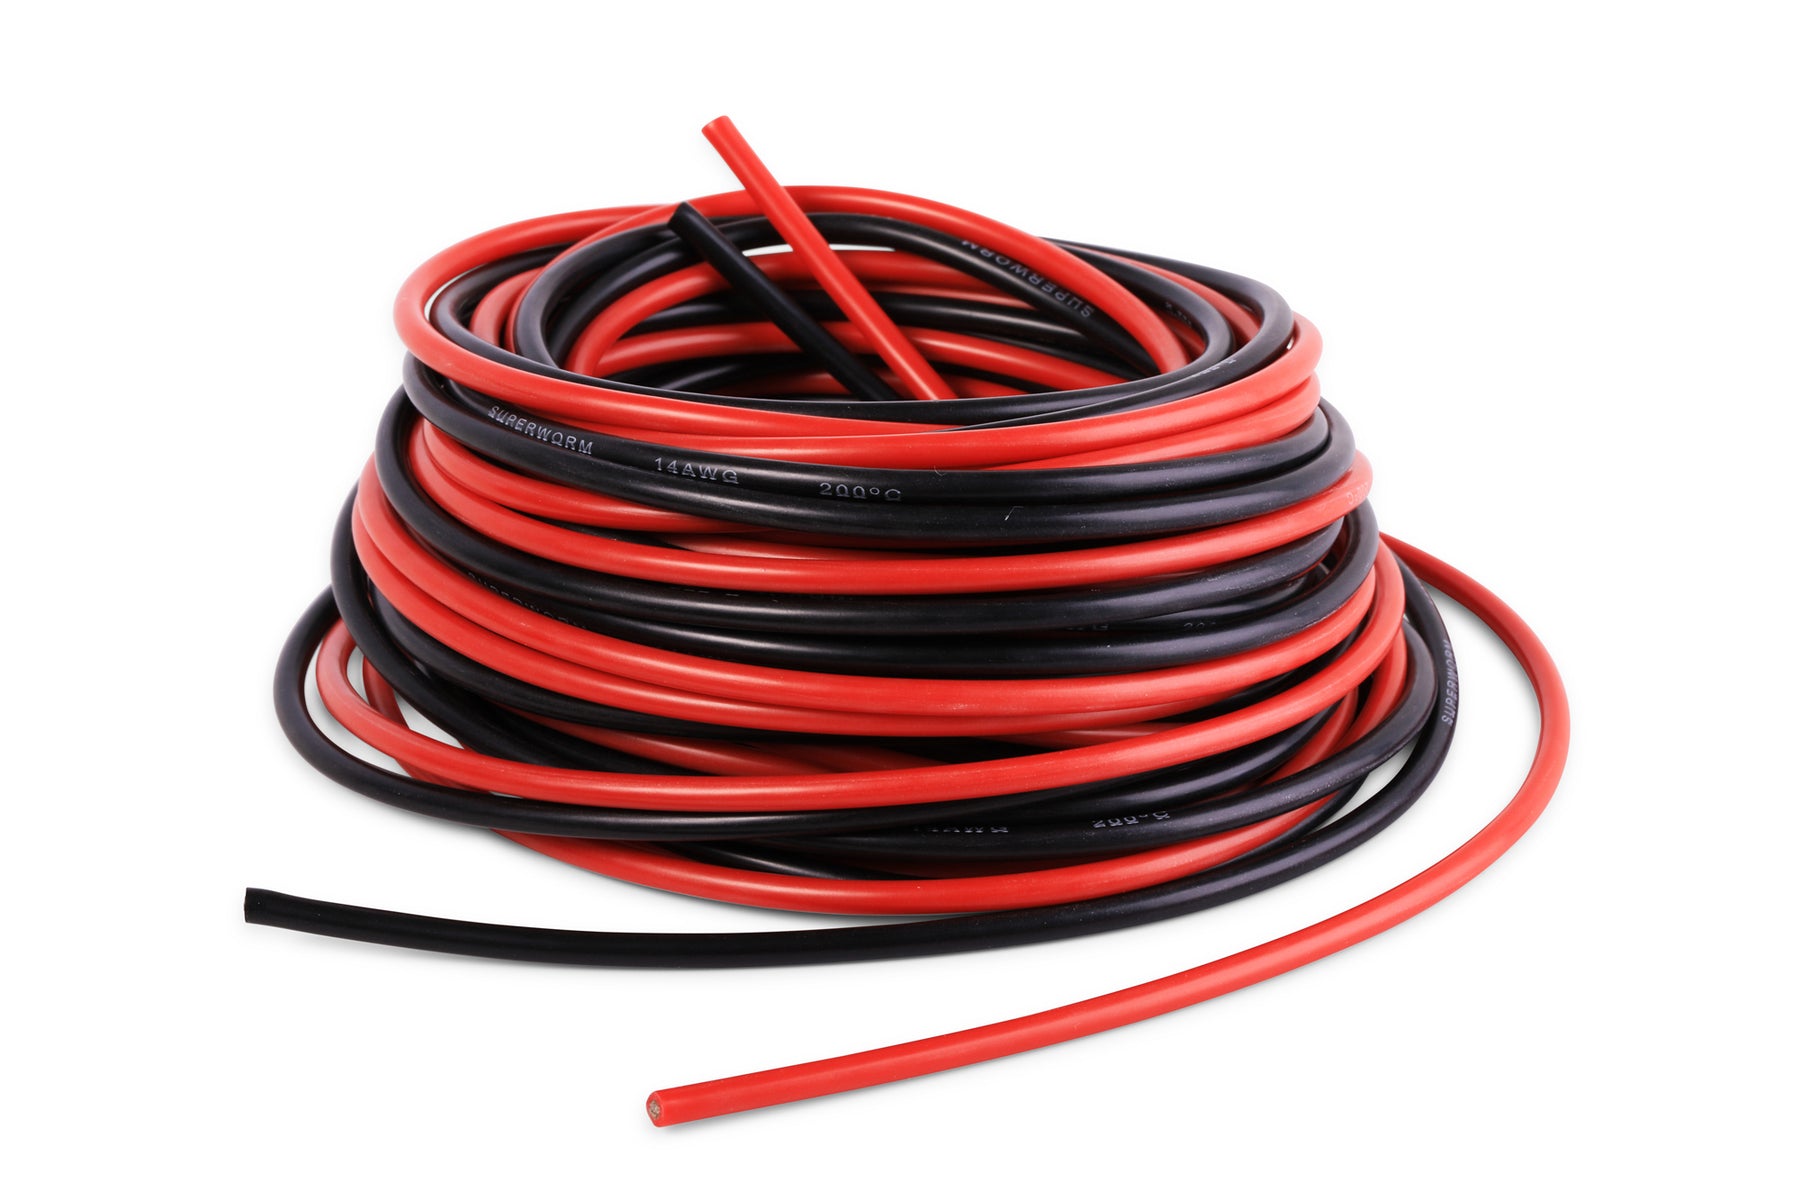 GS Power 14 Gauge AWG General Purpose Wiring, 100 Feet per Color, Red/Black